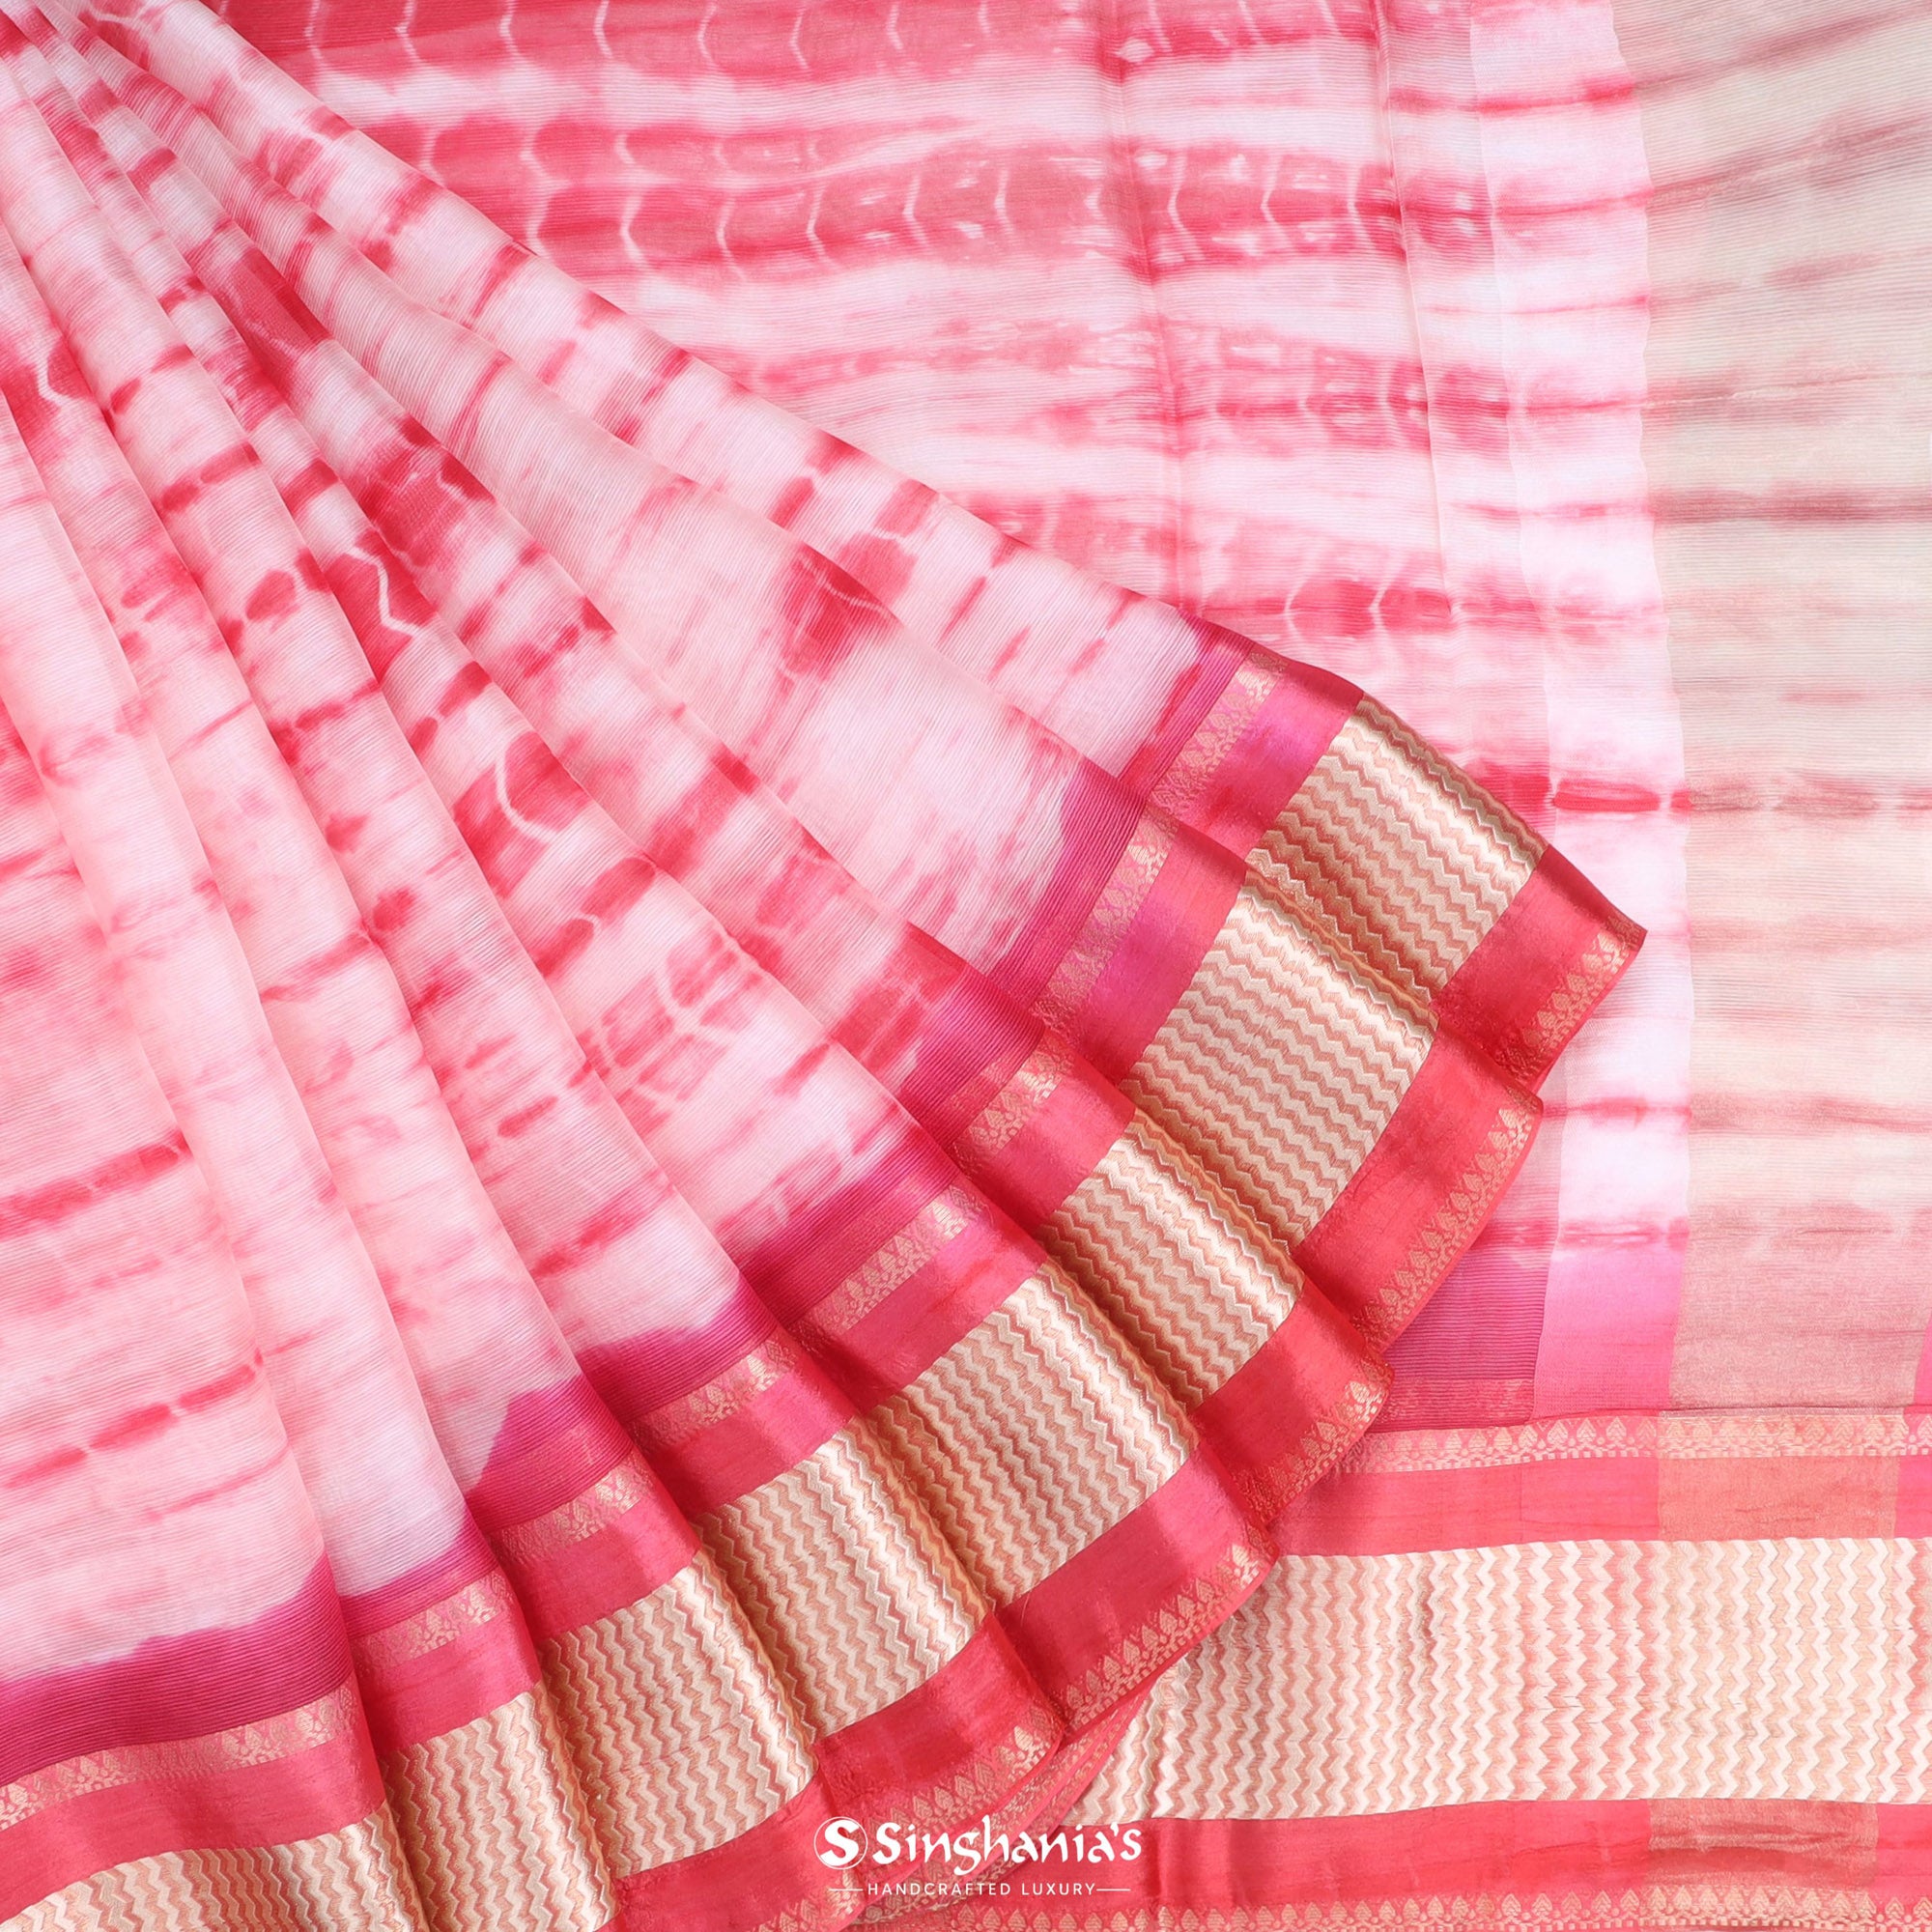 Cloud White Maheshwari Silk Saree With Printed Pattern